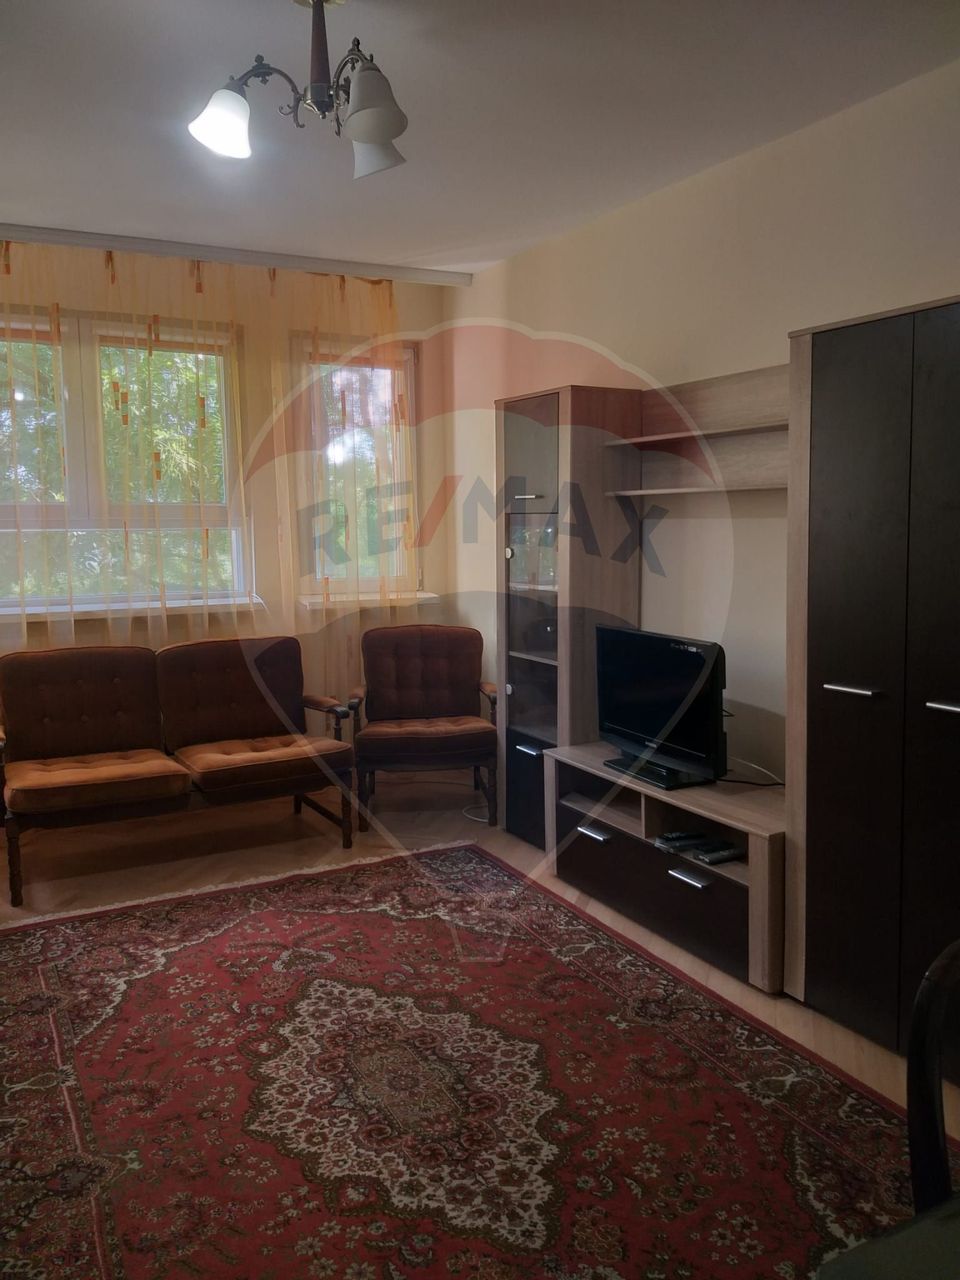 3-room apartment for rent in Titan area